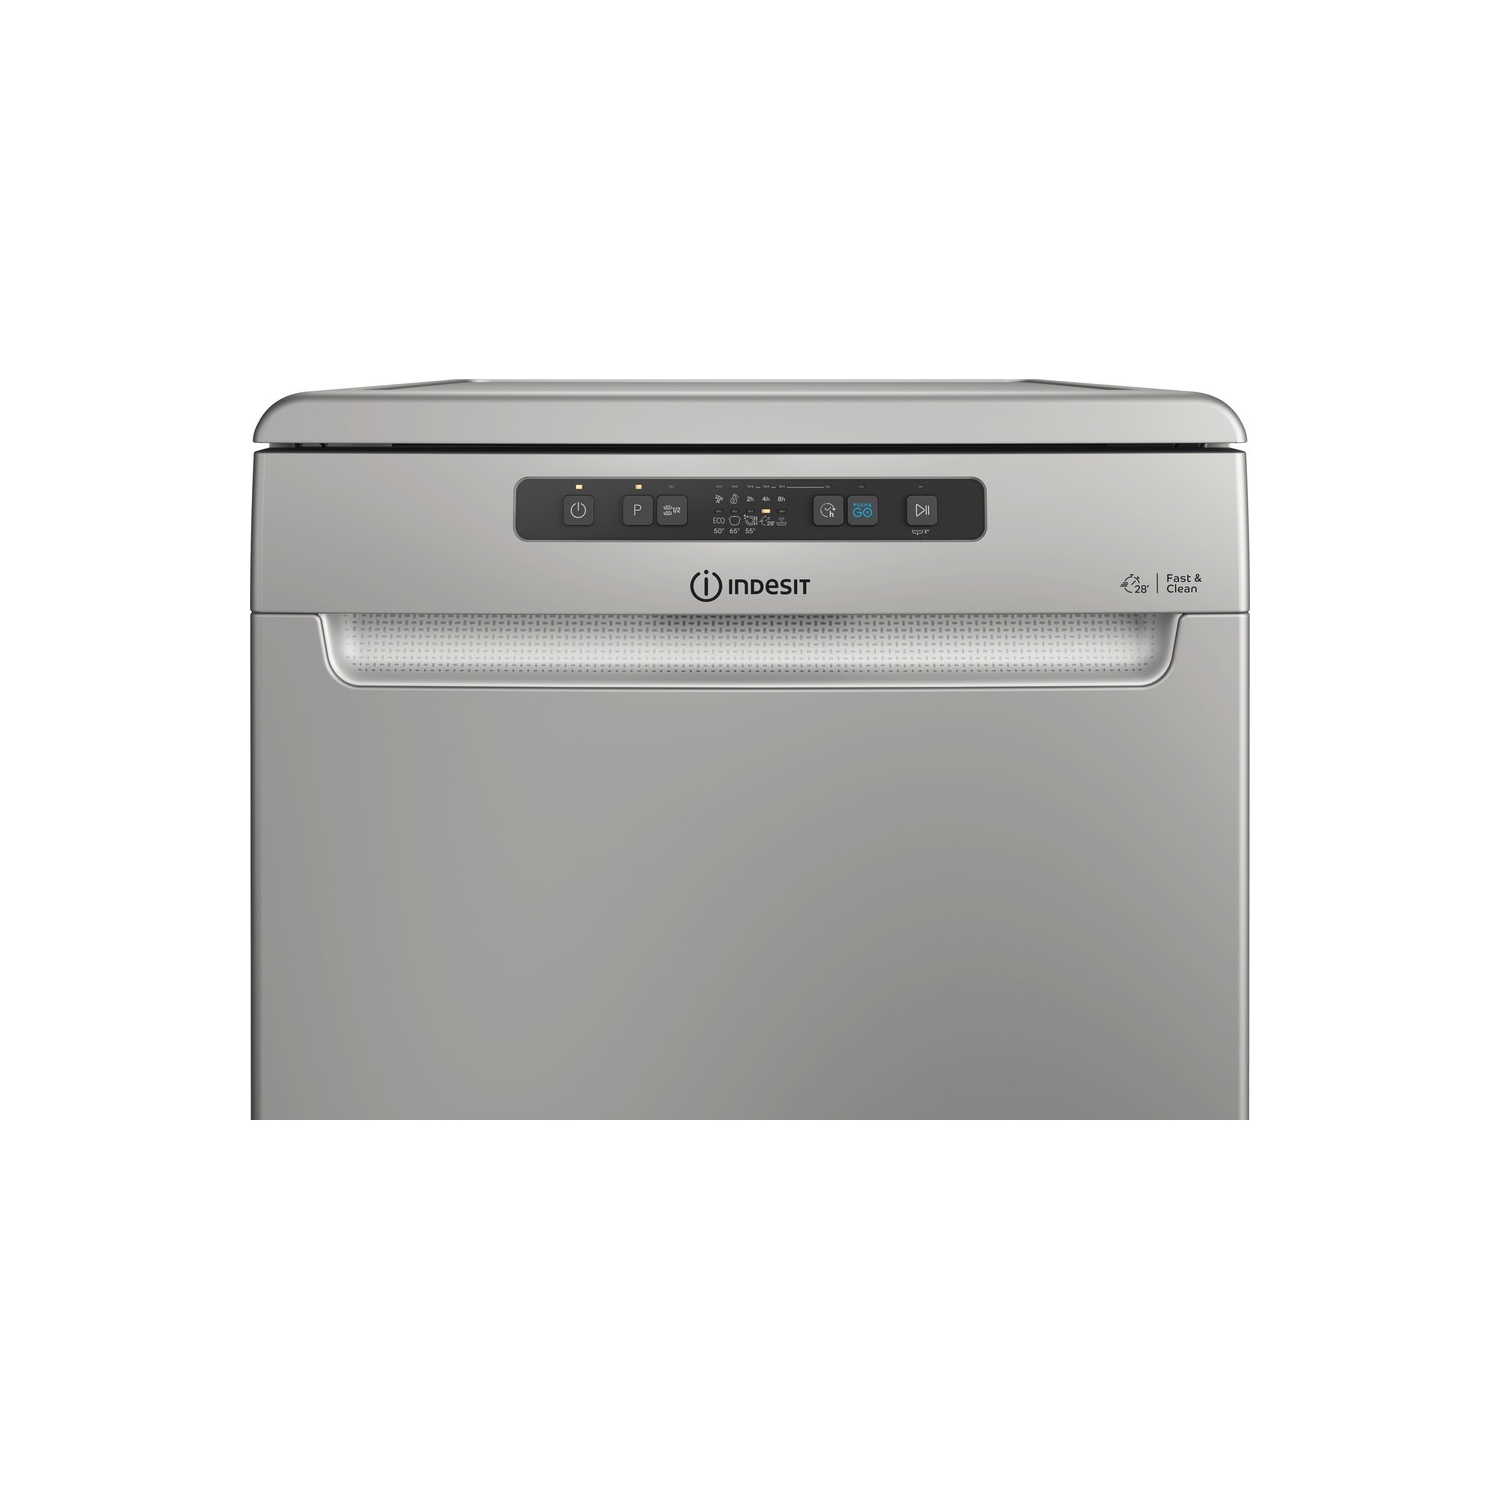 Indesit DFC2B16SUK Full Size Dishwasher - Silver - 13 Place Settings - 2